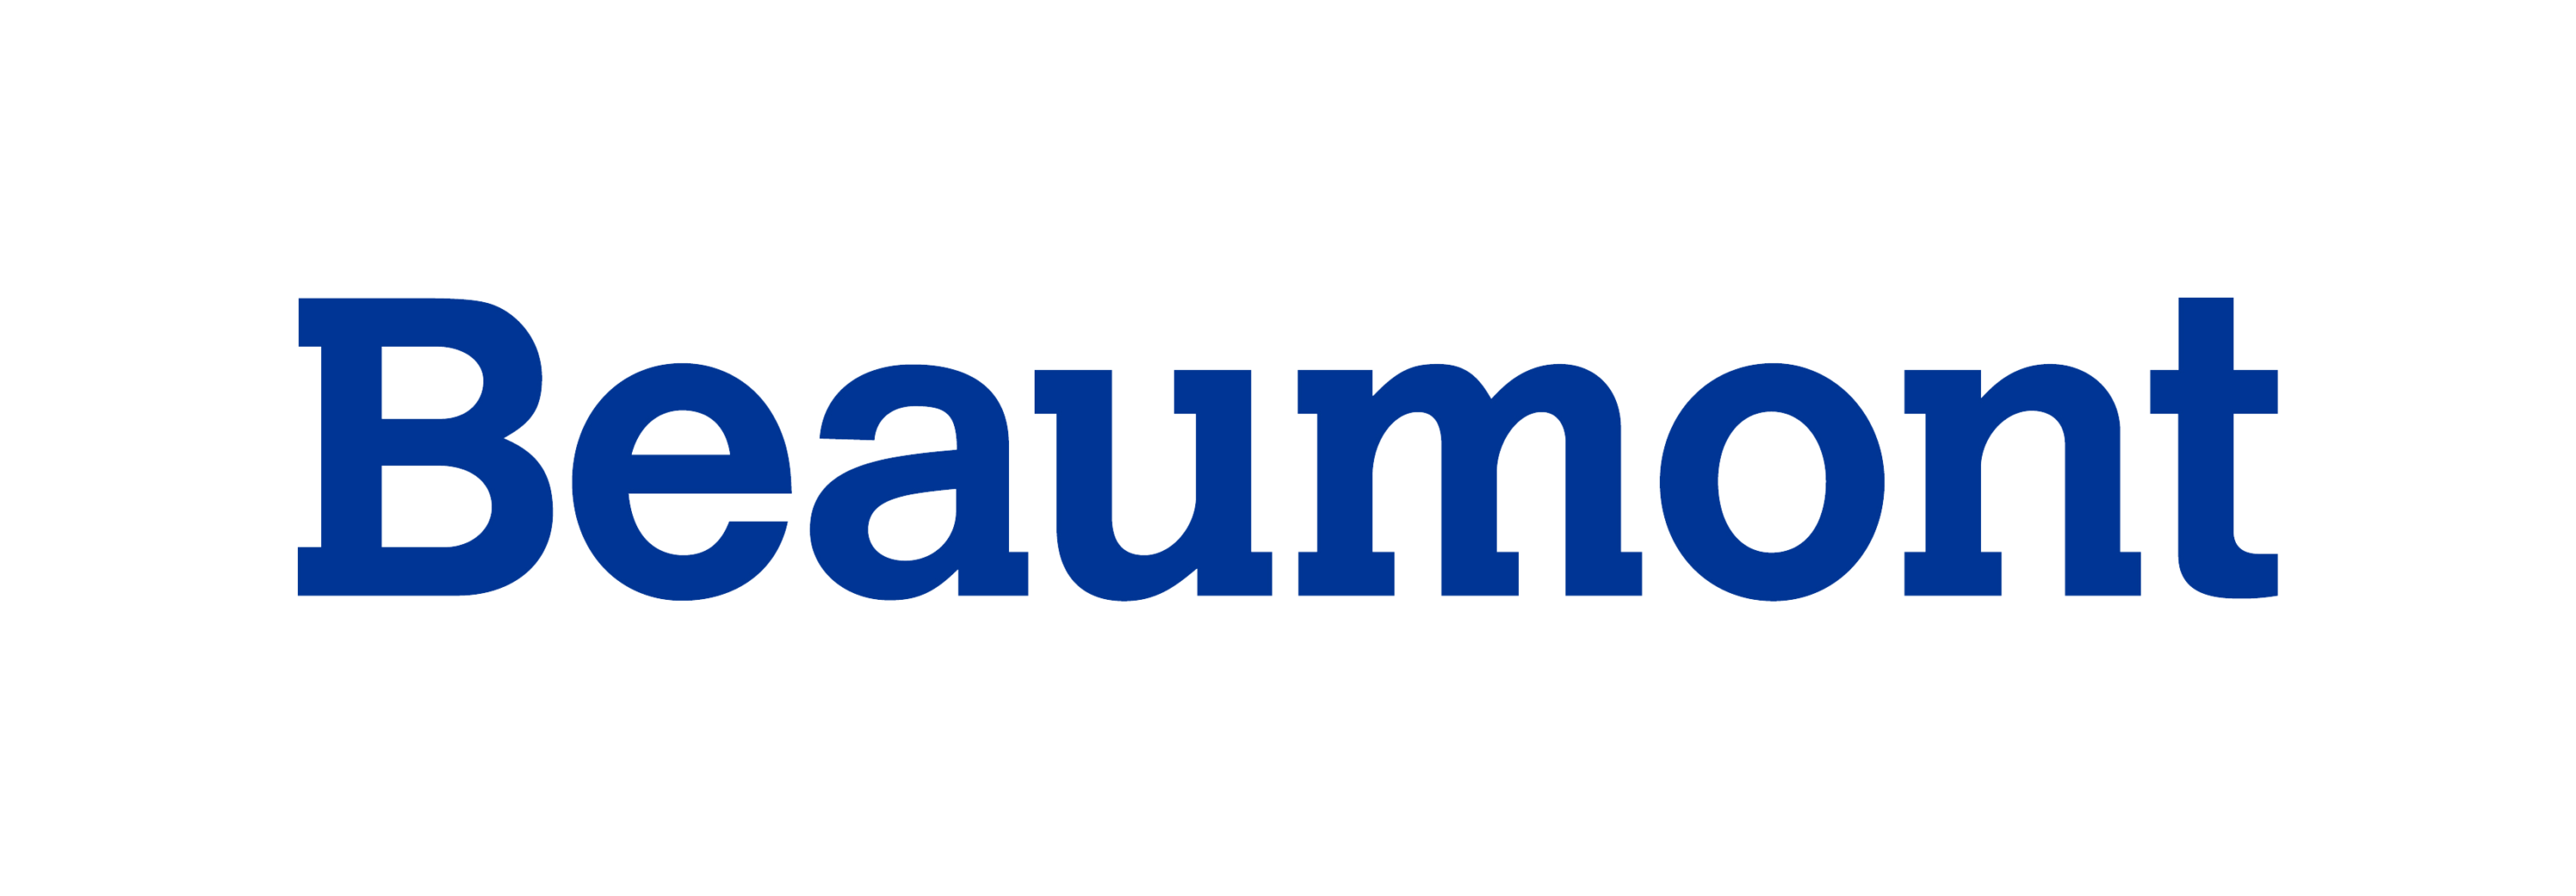 Beaumont Health logo